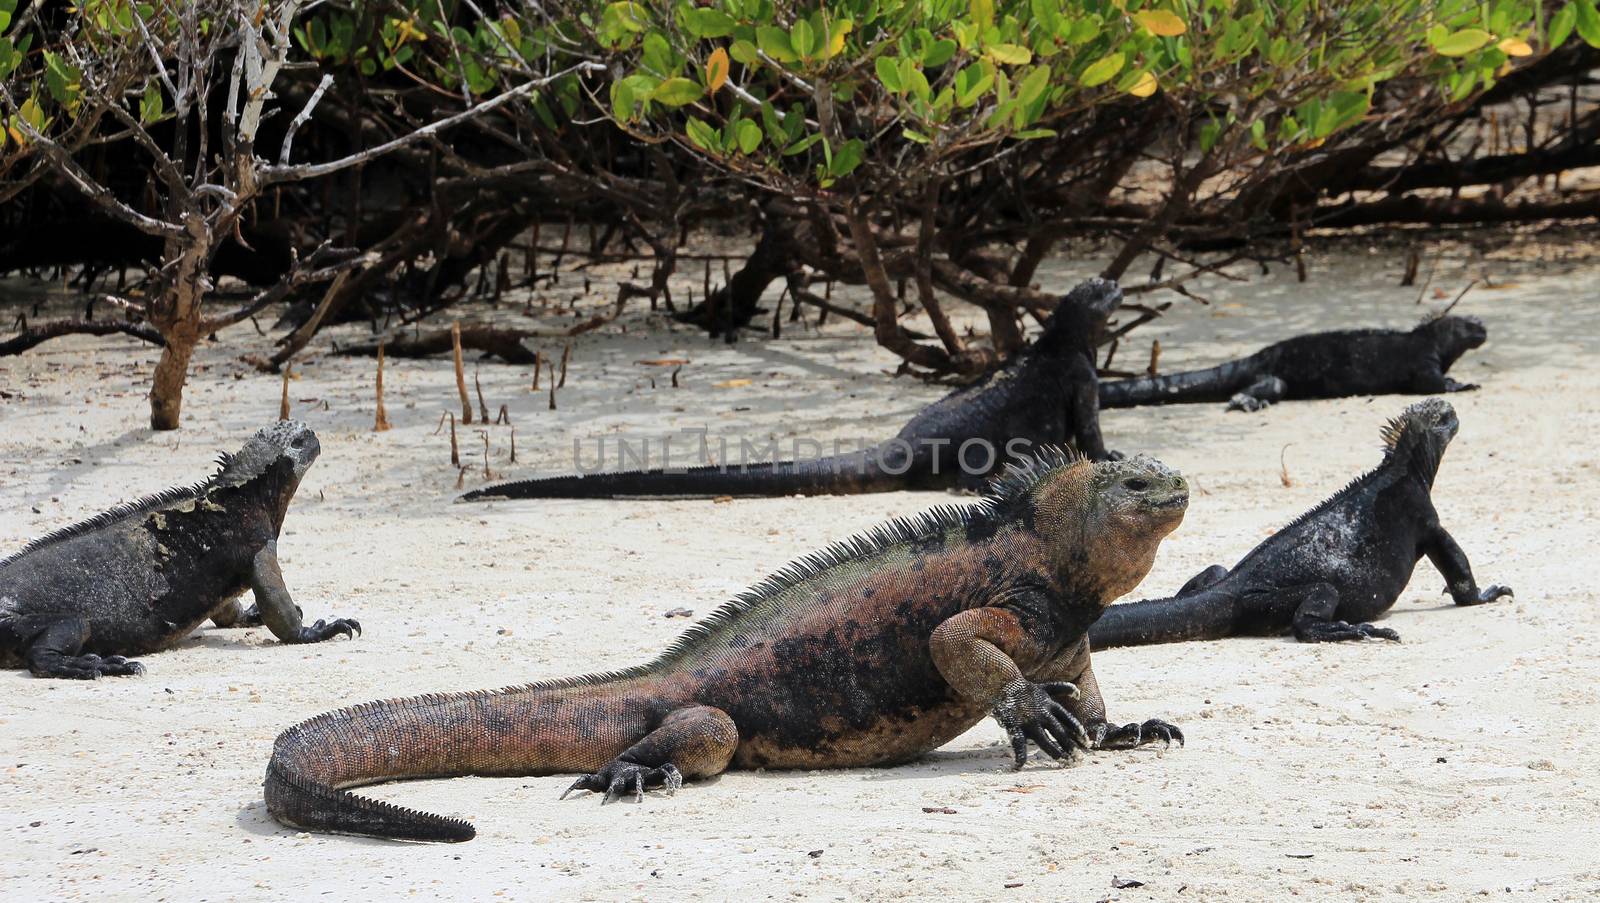 Galapagos Marine Iguanas at the beach by cicloco